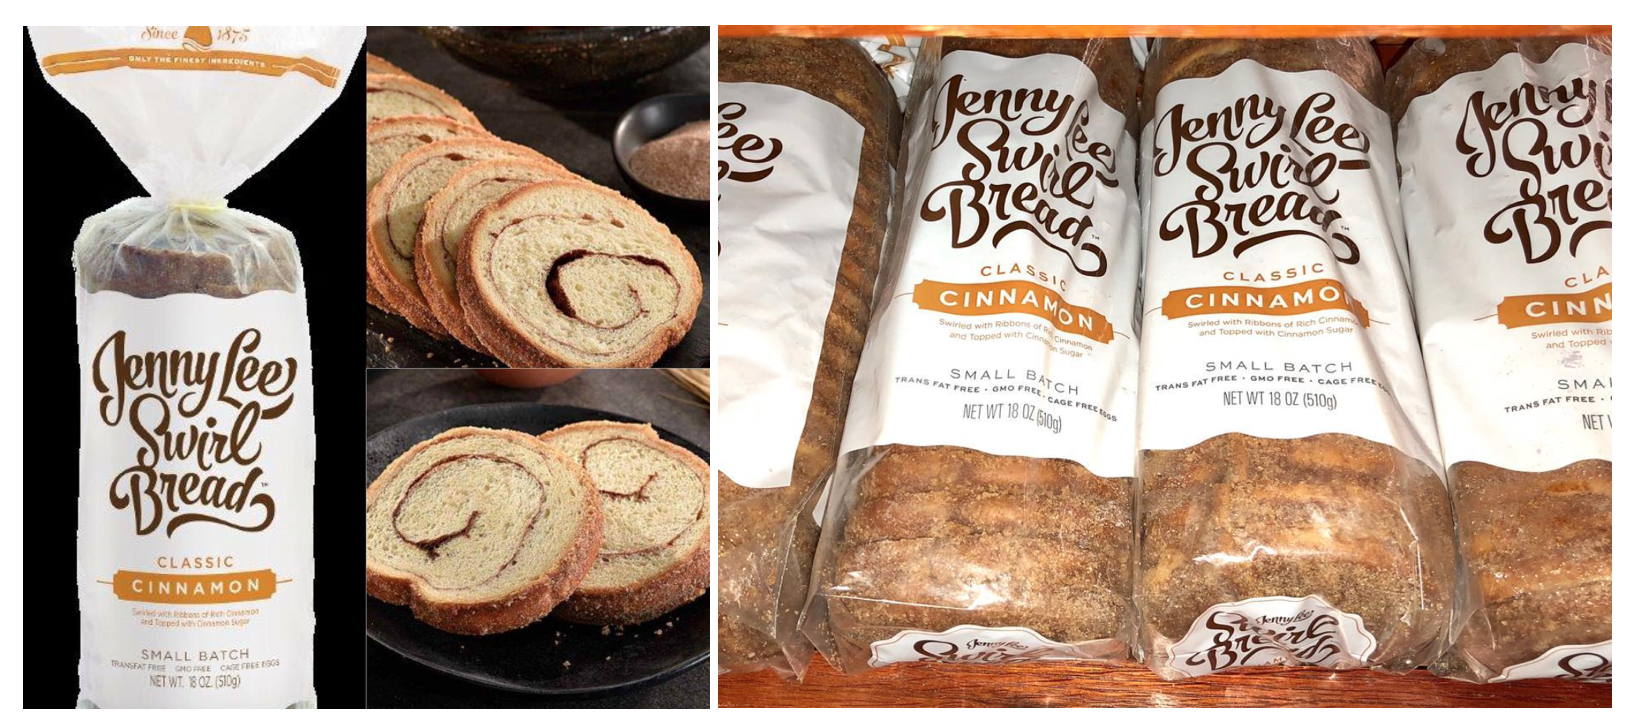 HOT* Jewel-Osco: FREE Jenny Lee Classic Cinnamon Swirl Bread (Tomorrow  ONLY!) - Dapper Deals